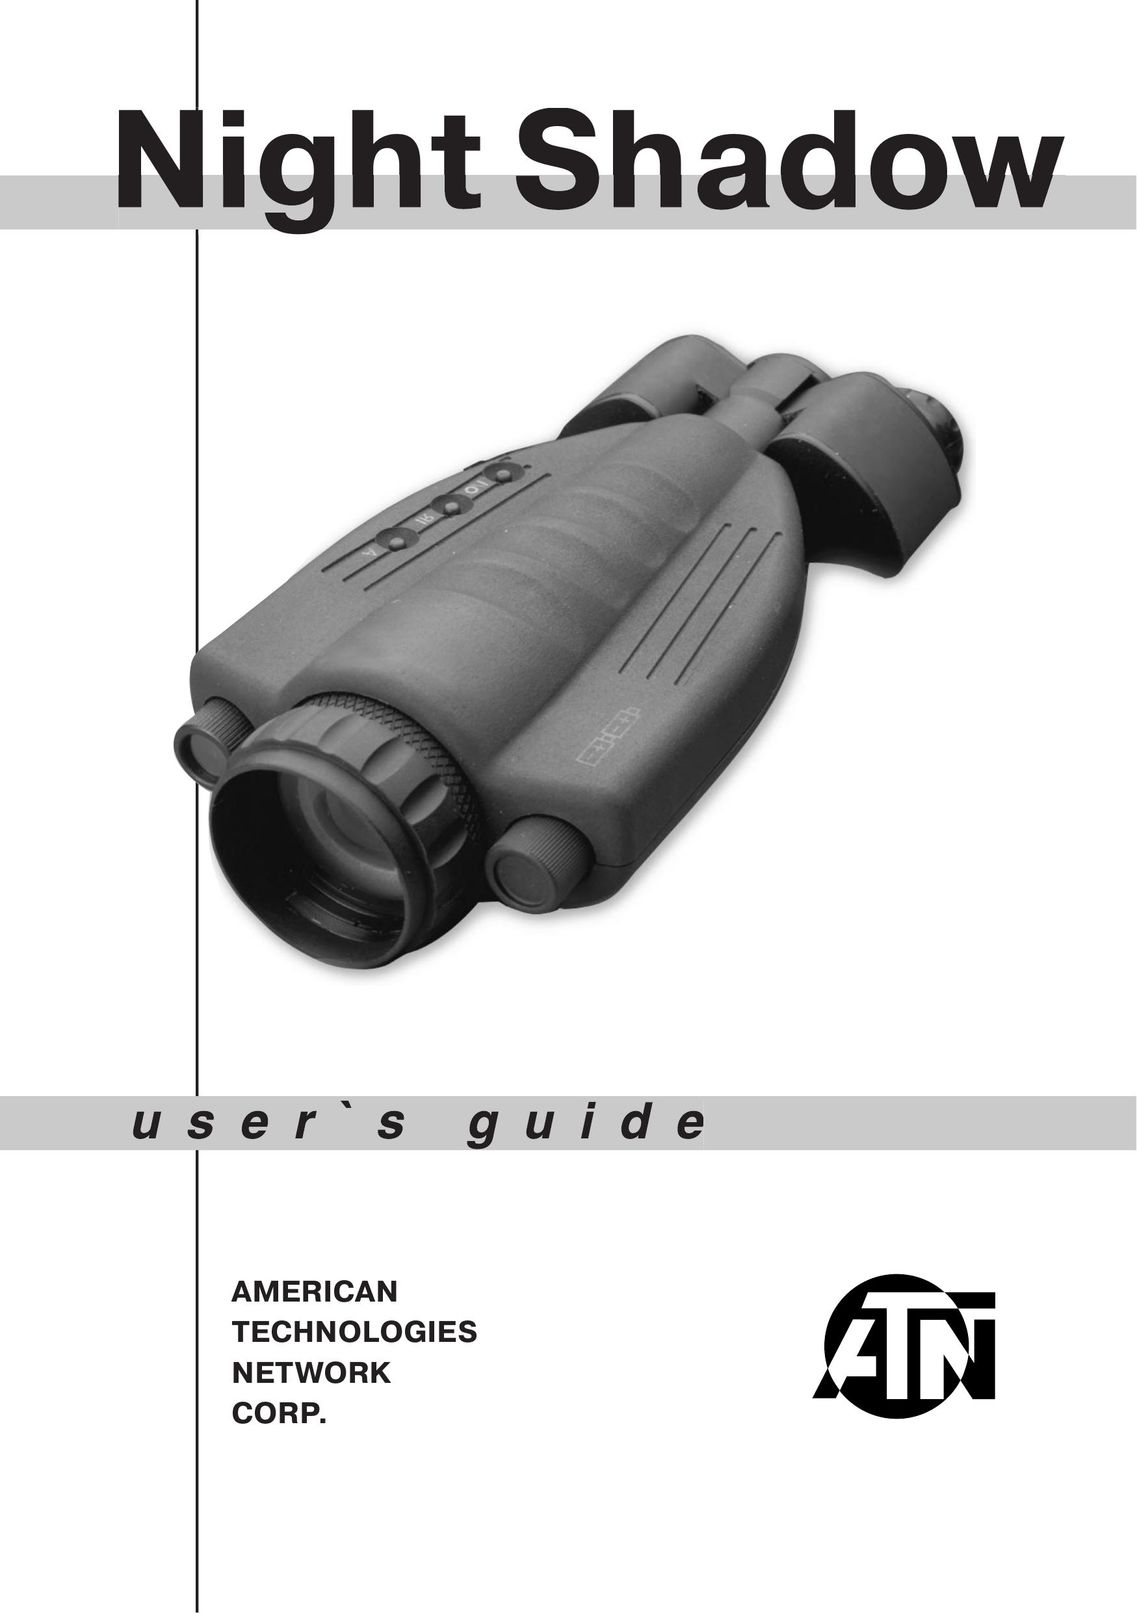 ATN Biocular Binoculars User Manual